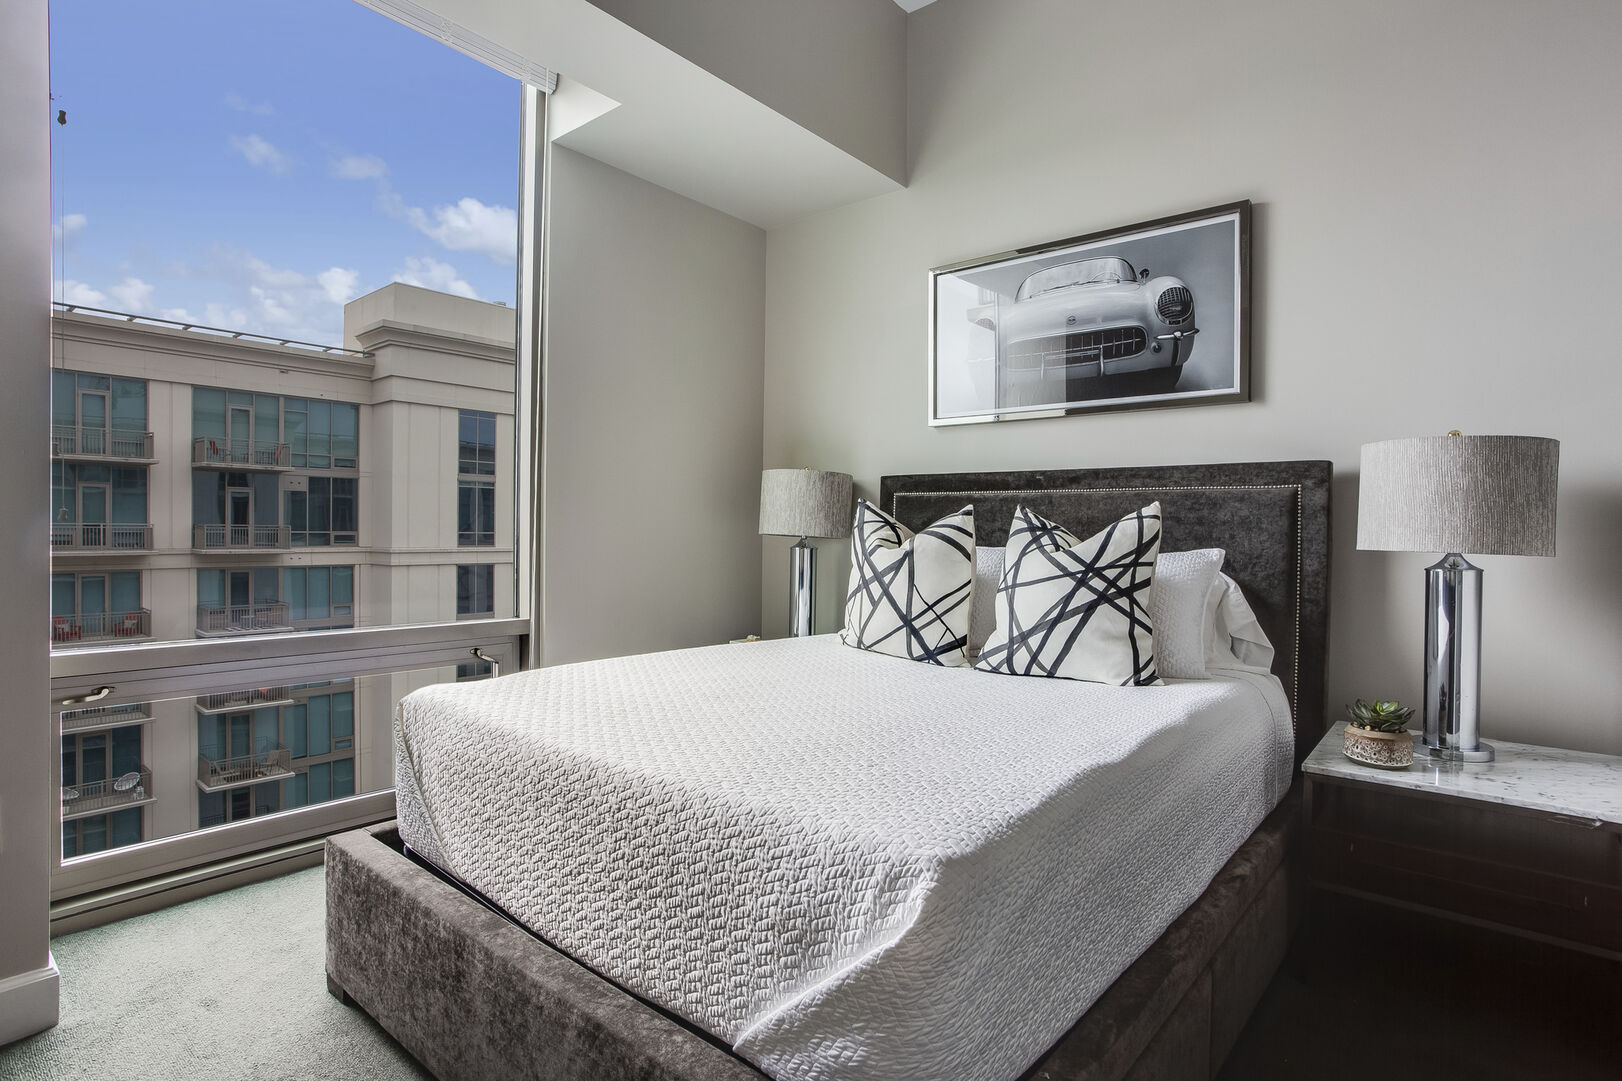 This Atlanta Vacation Rental's Bedroom features wide windows